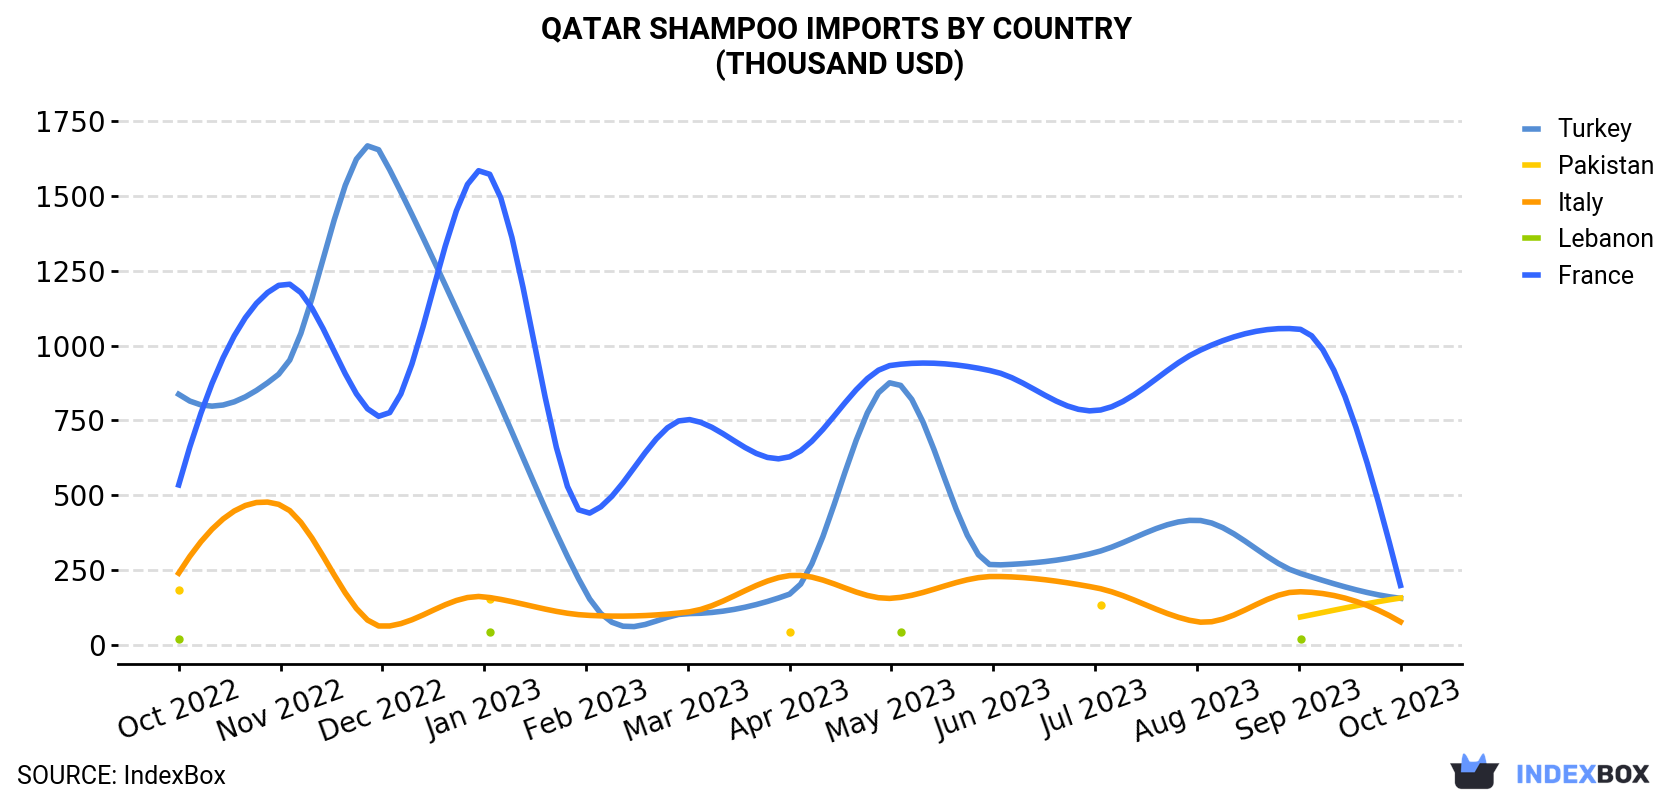 Qatar Shampoo Imports By Country (Thousand USD)